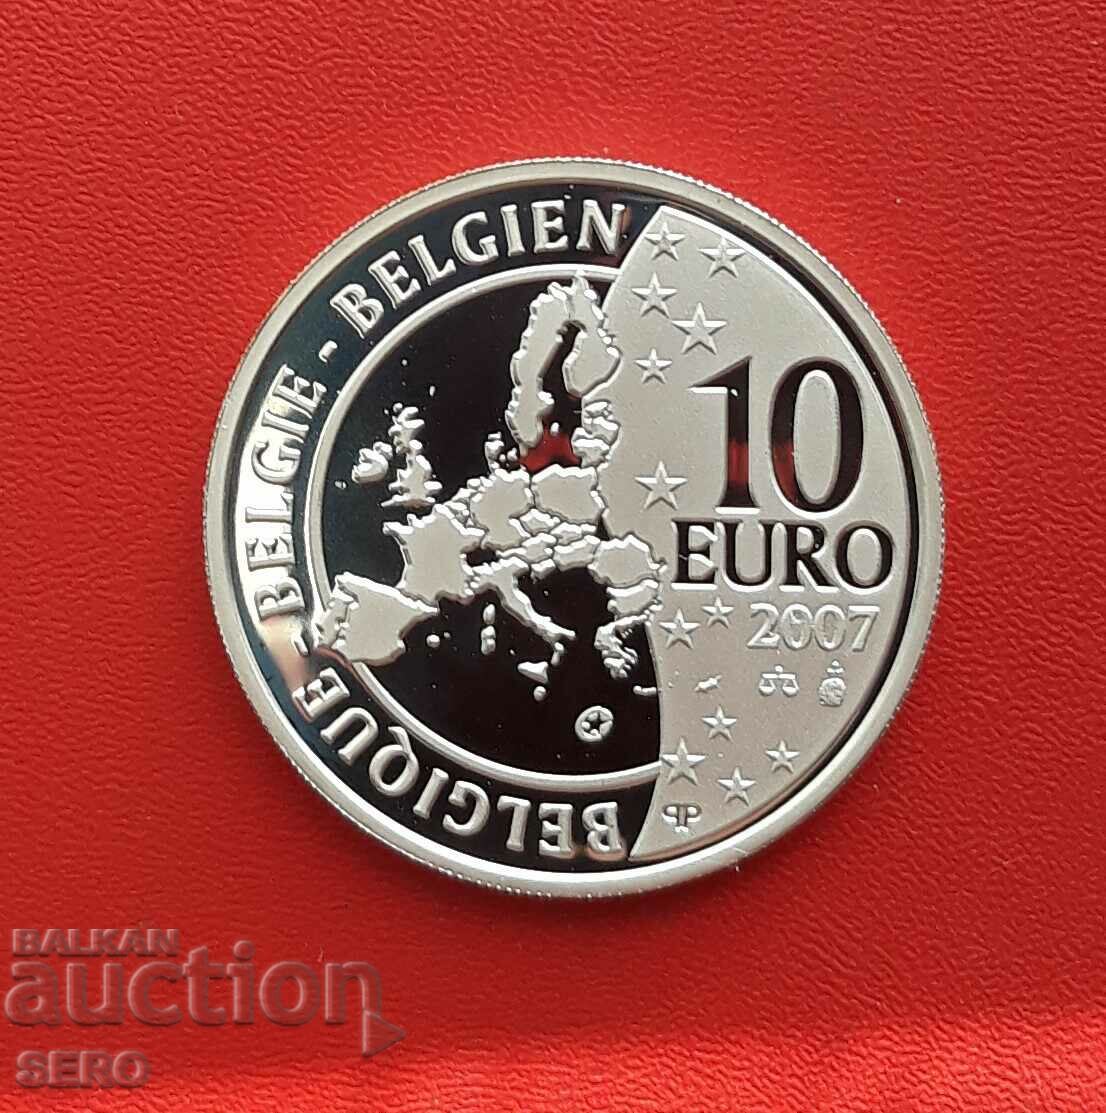 Belgium-10 euros 2007-50 from the Treaty of Rome-circulation 15192 pcs.